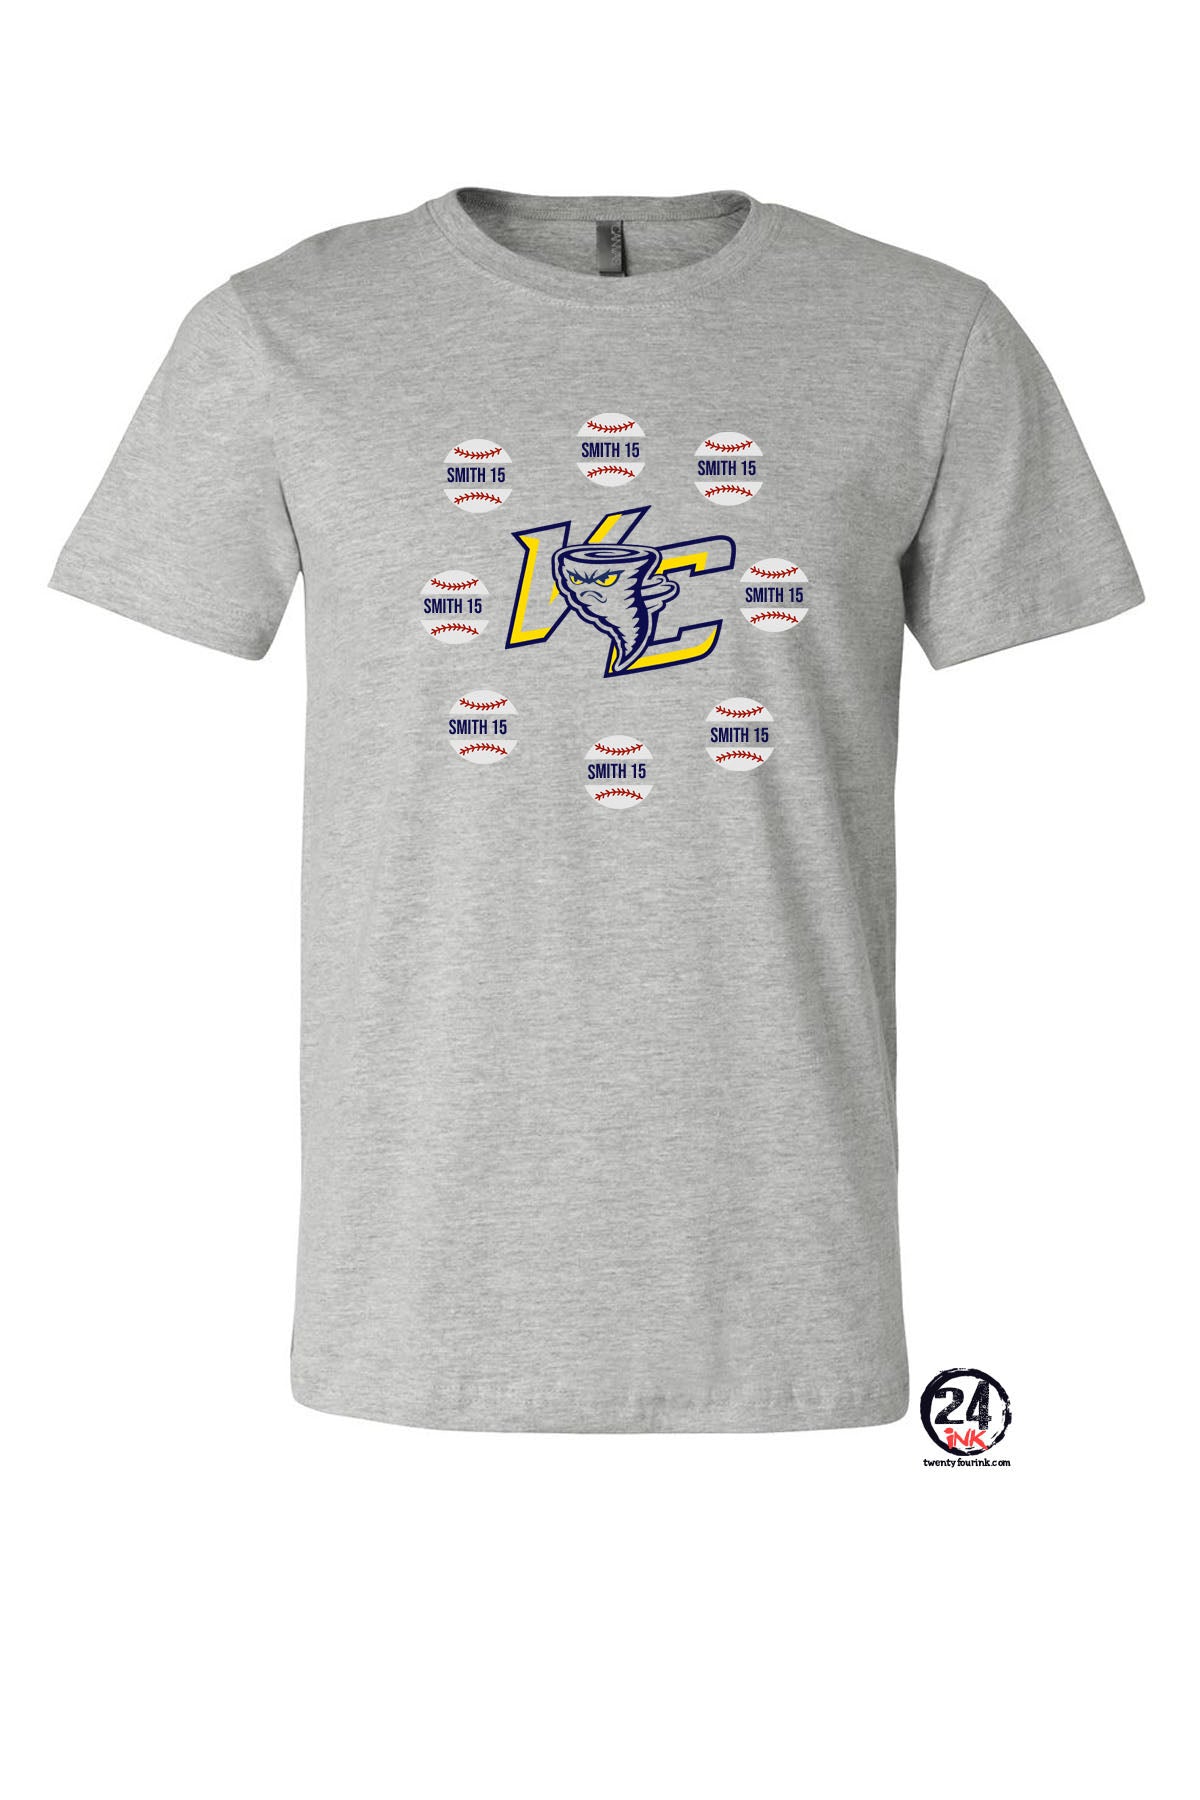 Cyclones Design 2 t-Shirt